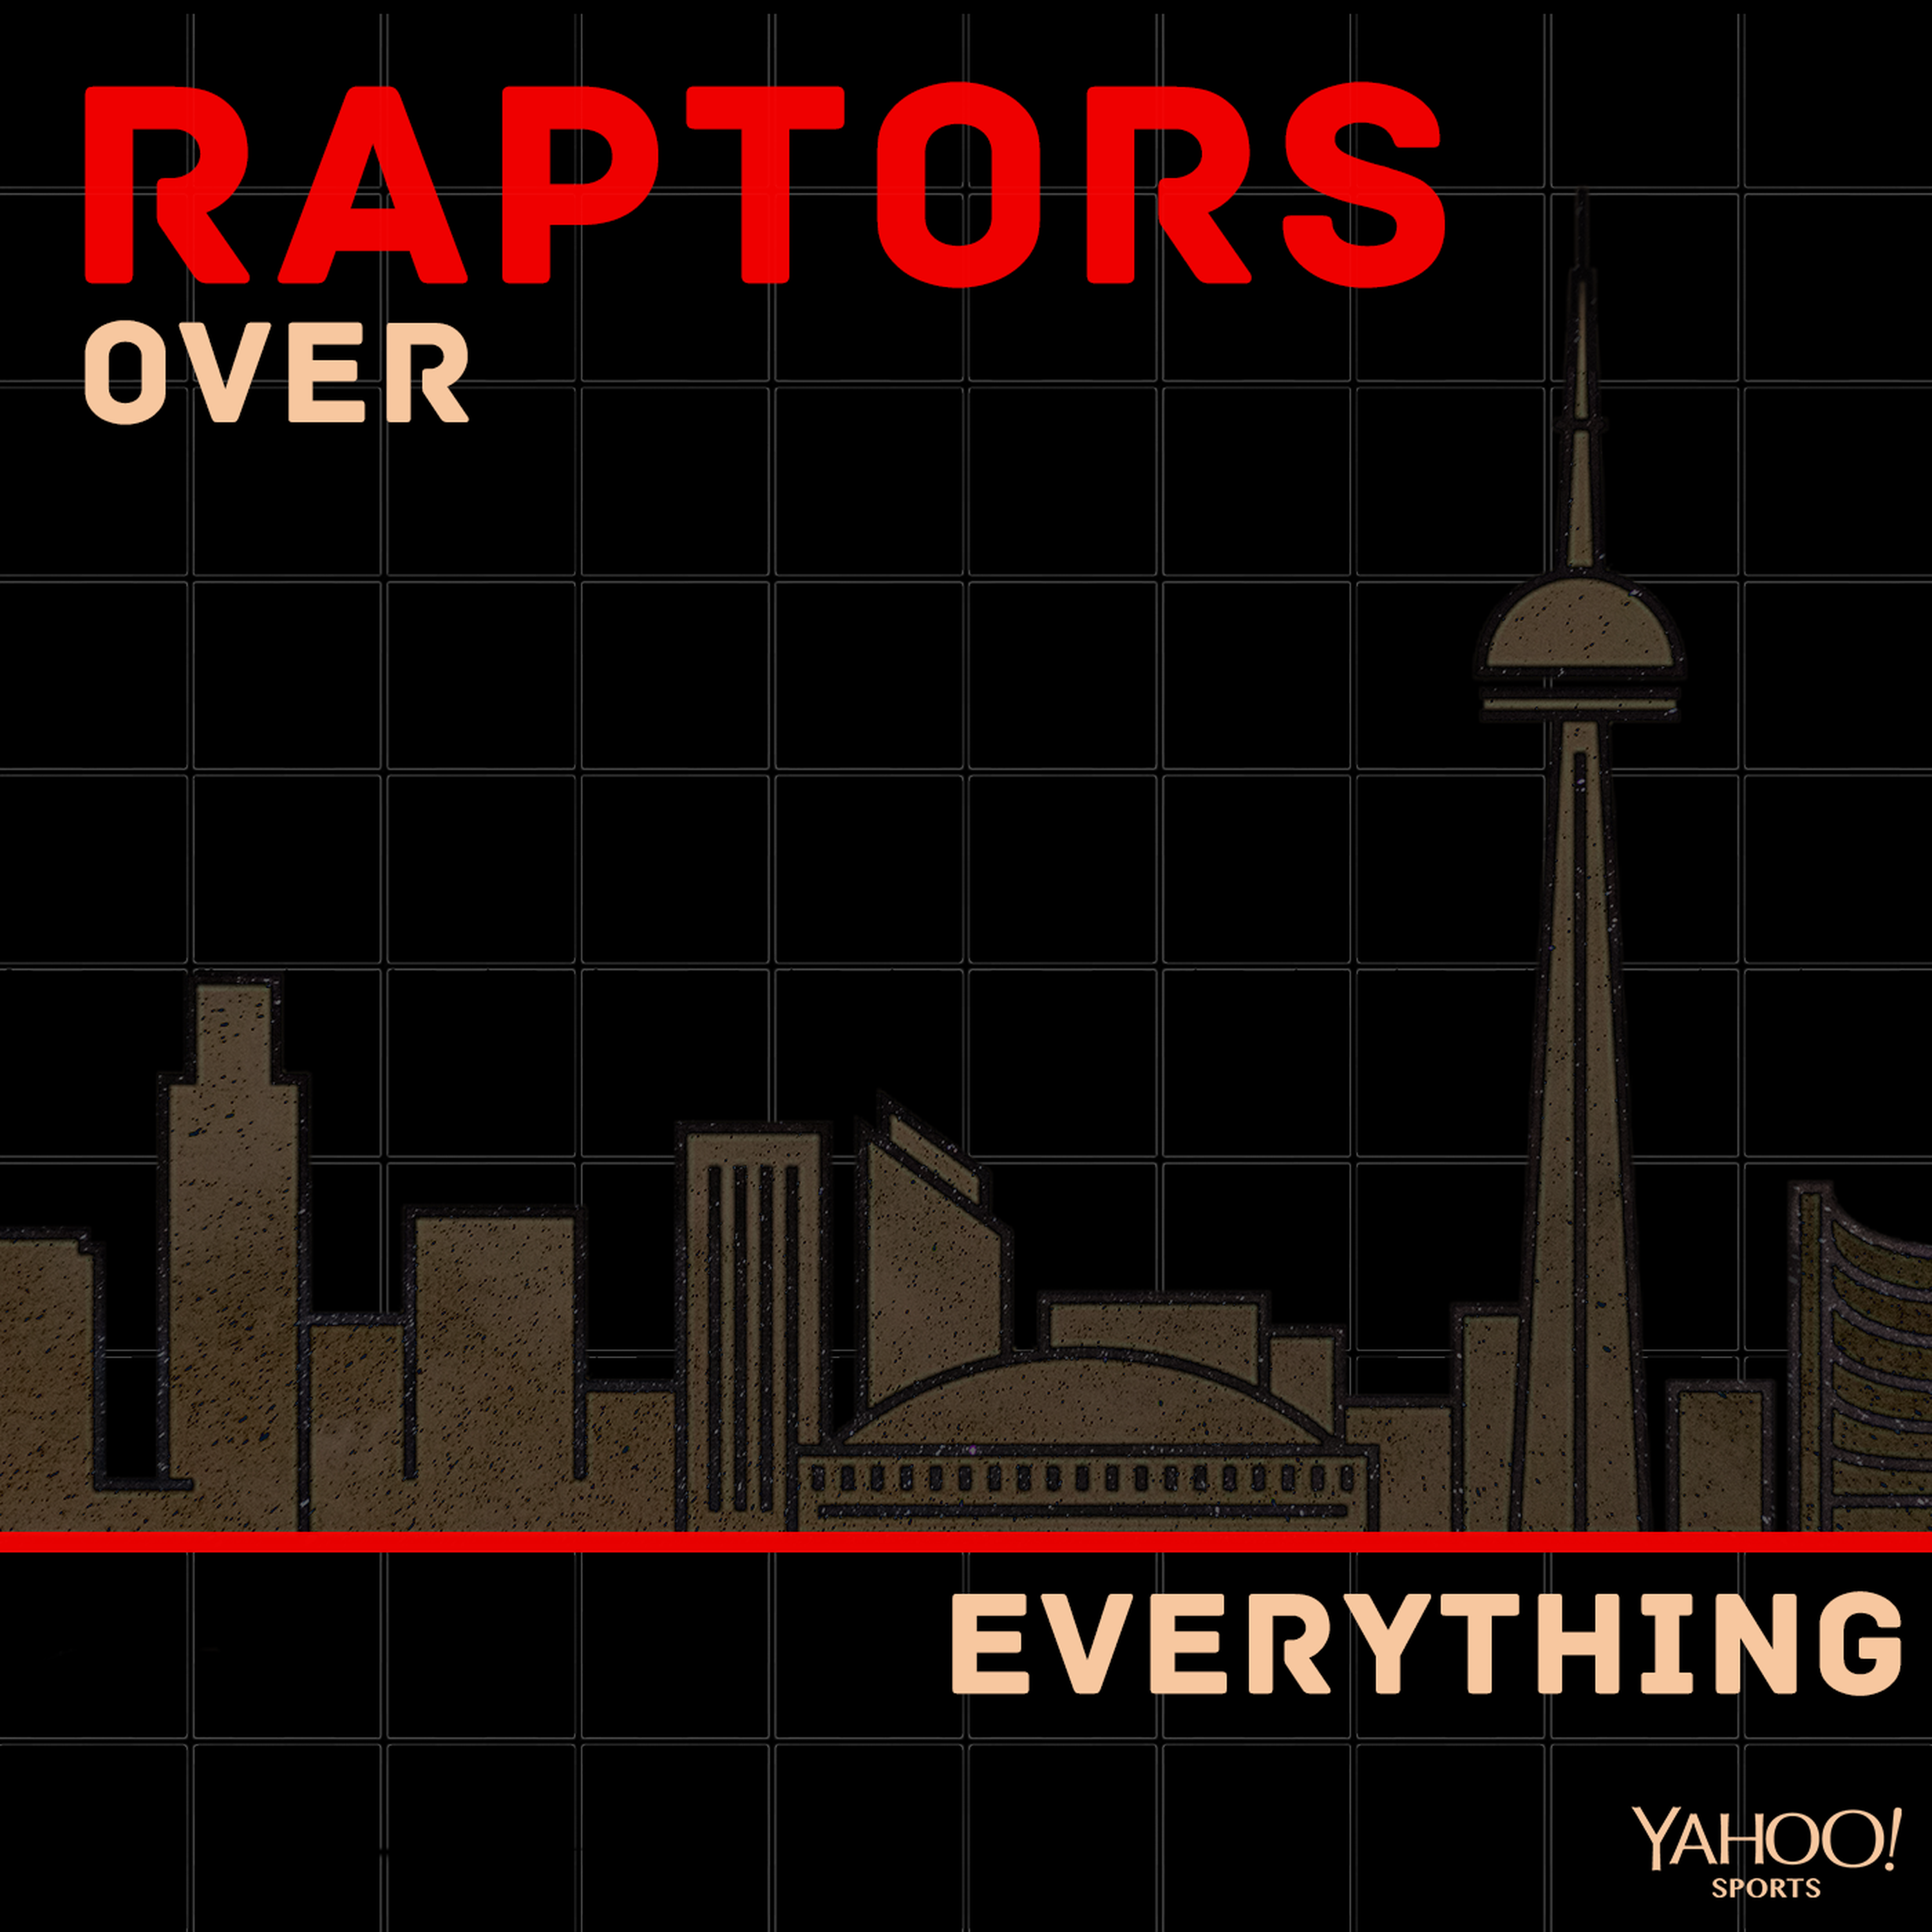 Raptors-Warriors NBA Finals preview with Vivek Jacob, Josh Hart, Harrison Sanford